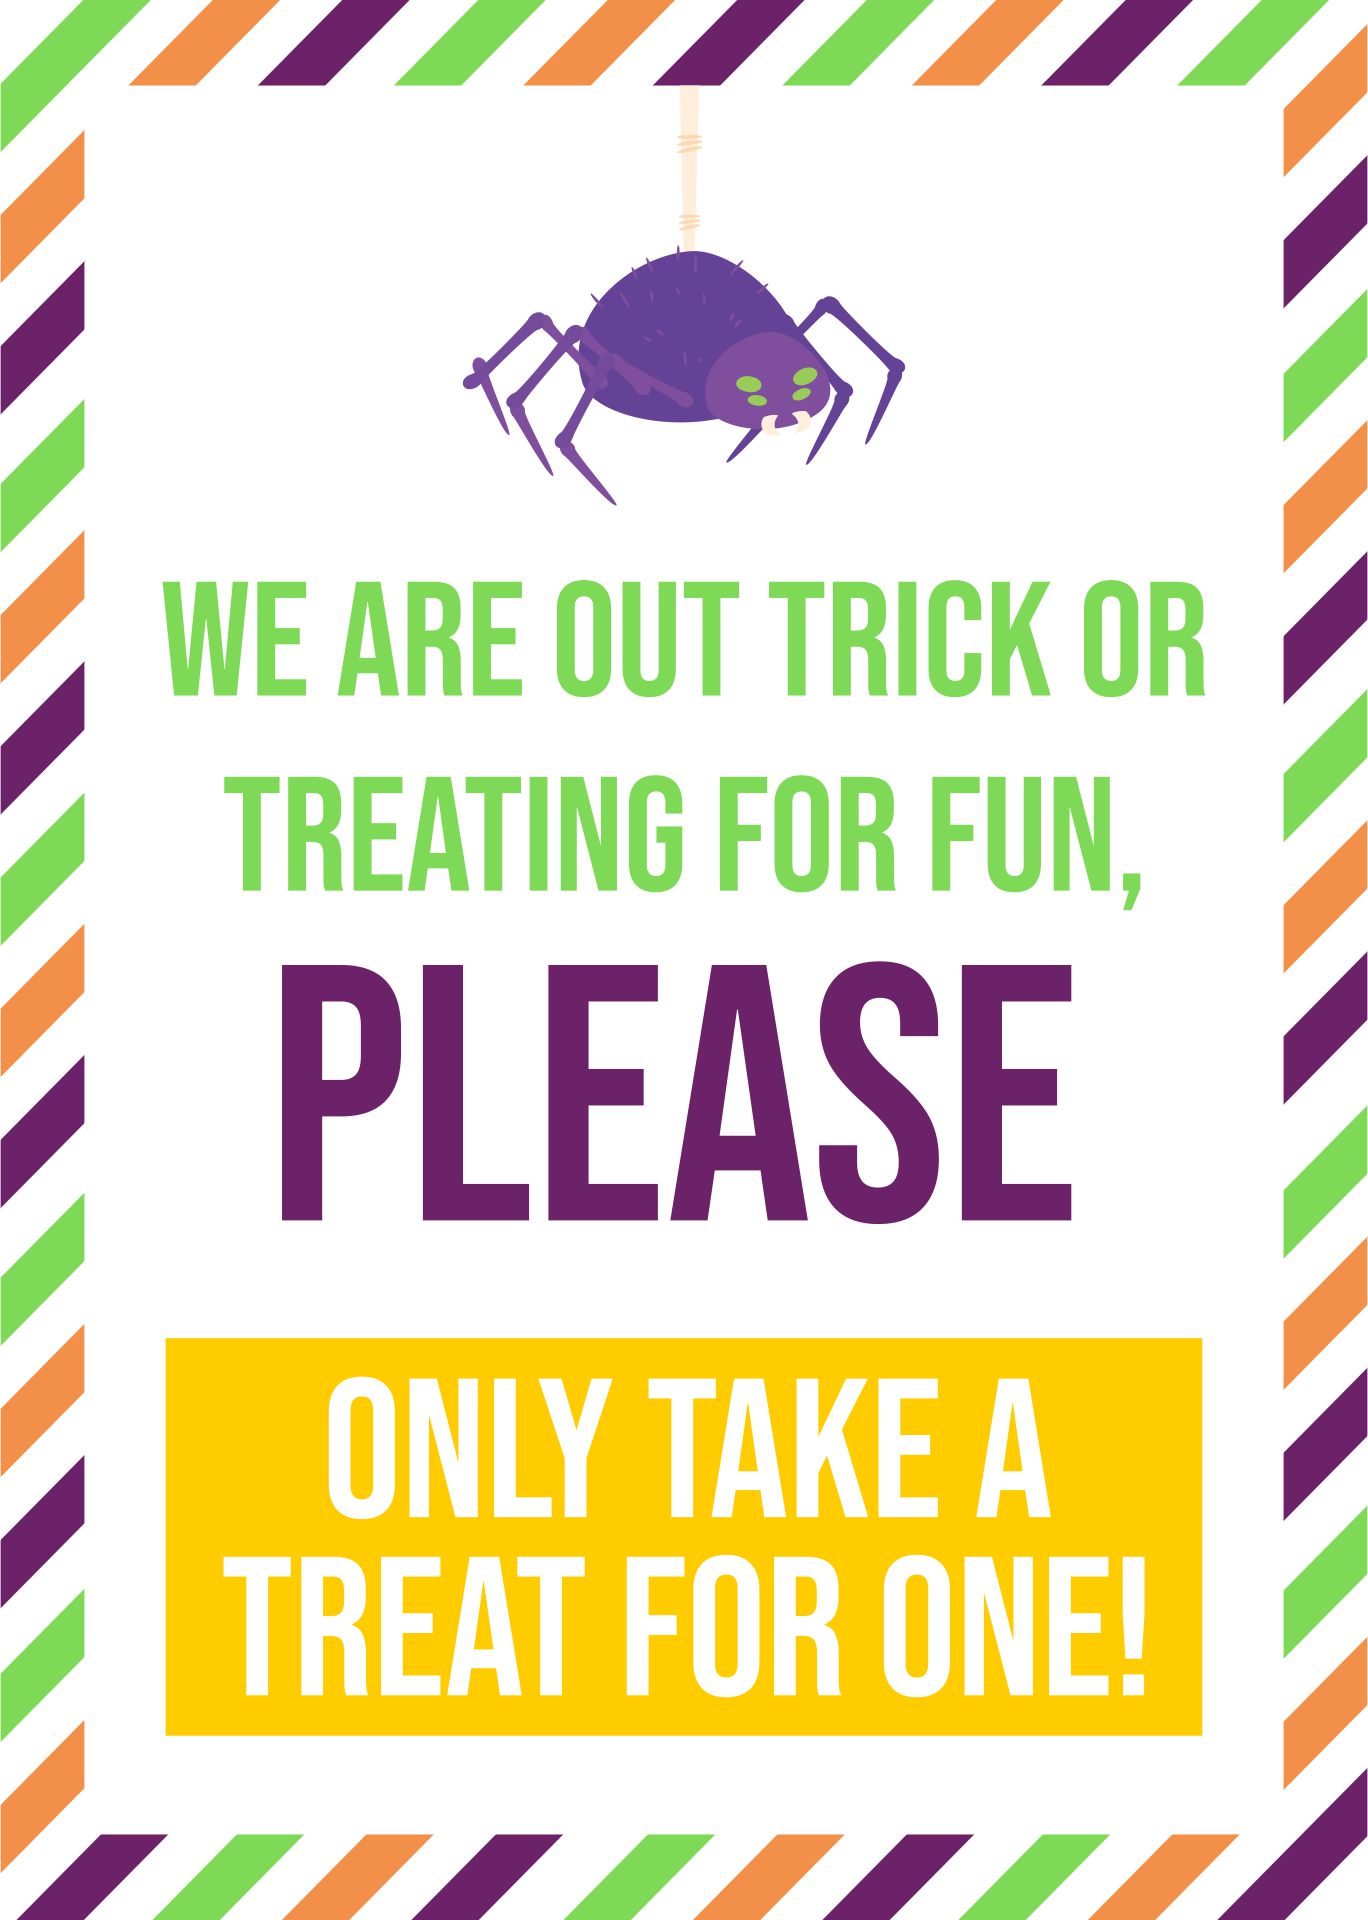 Free Printable Halloween Candy Bowl Sign